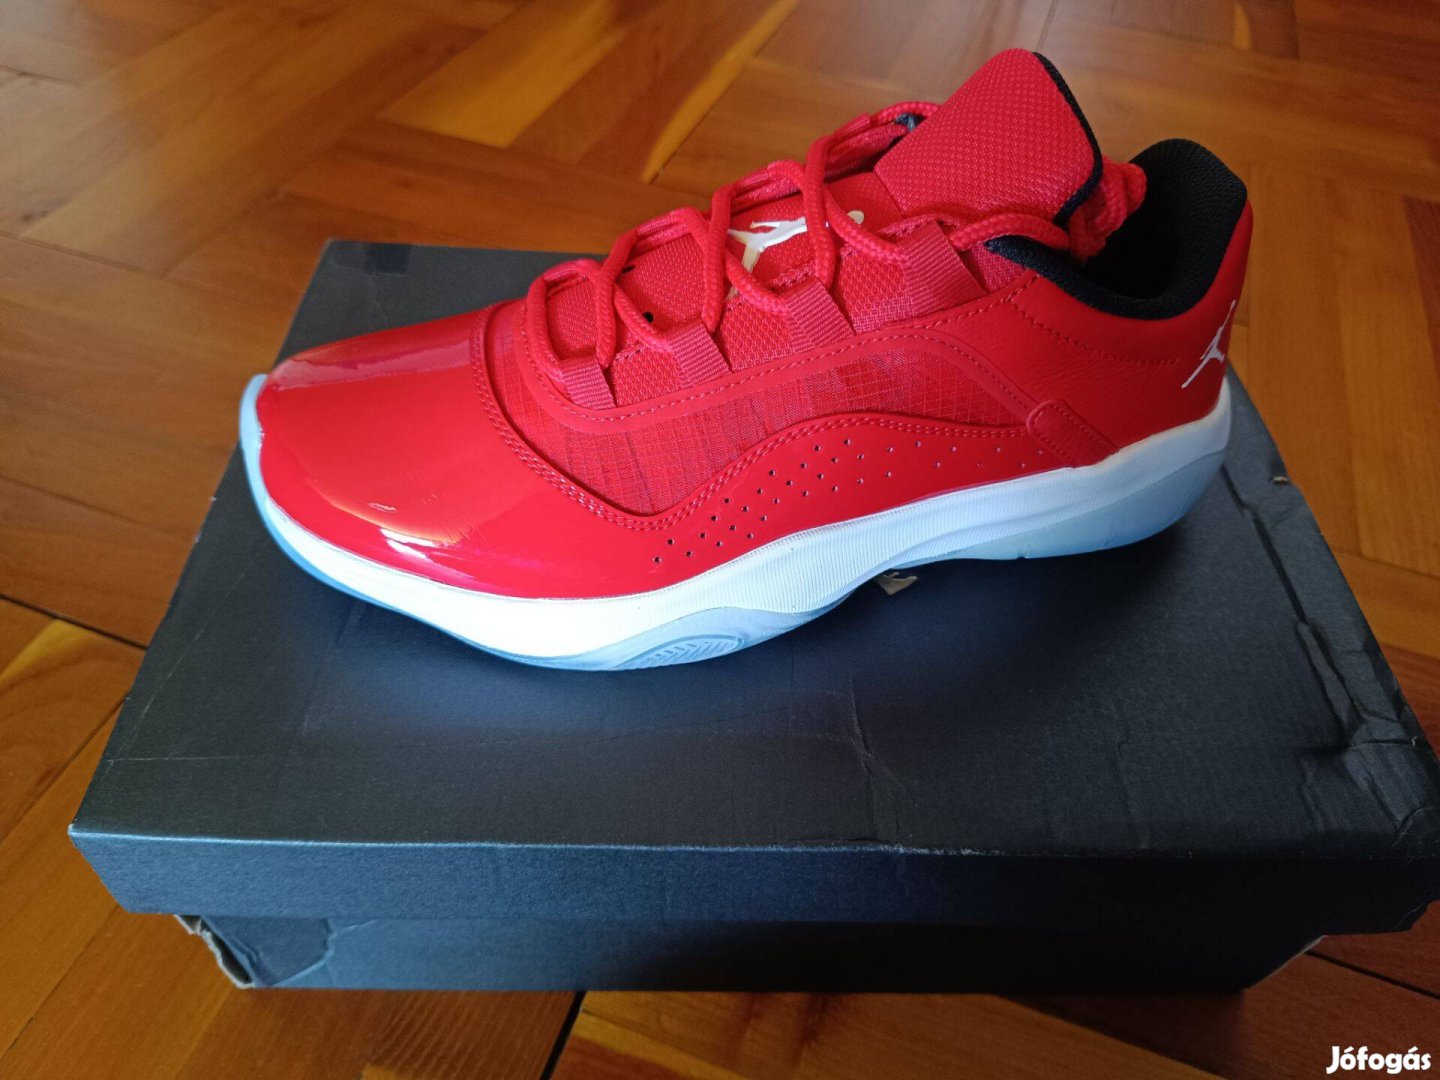 Jordan 11 cmft low red új cipő 43-as